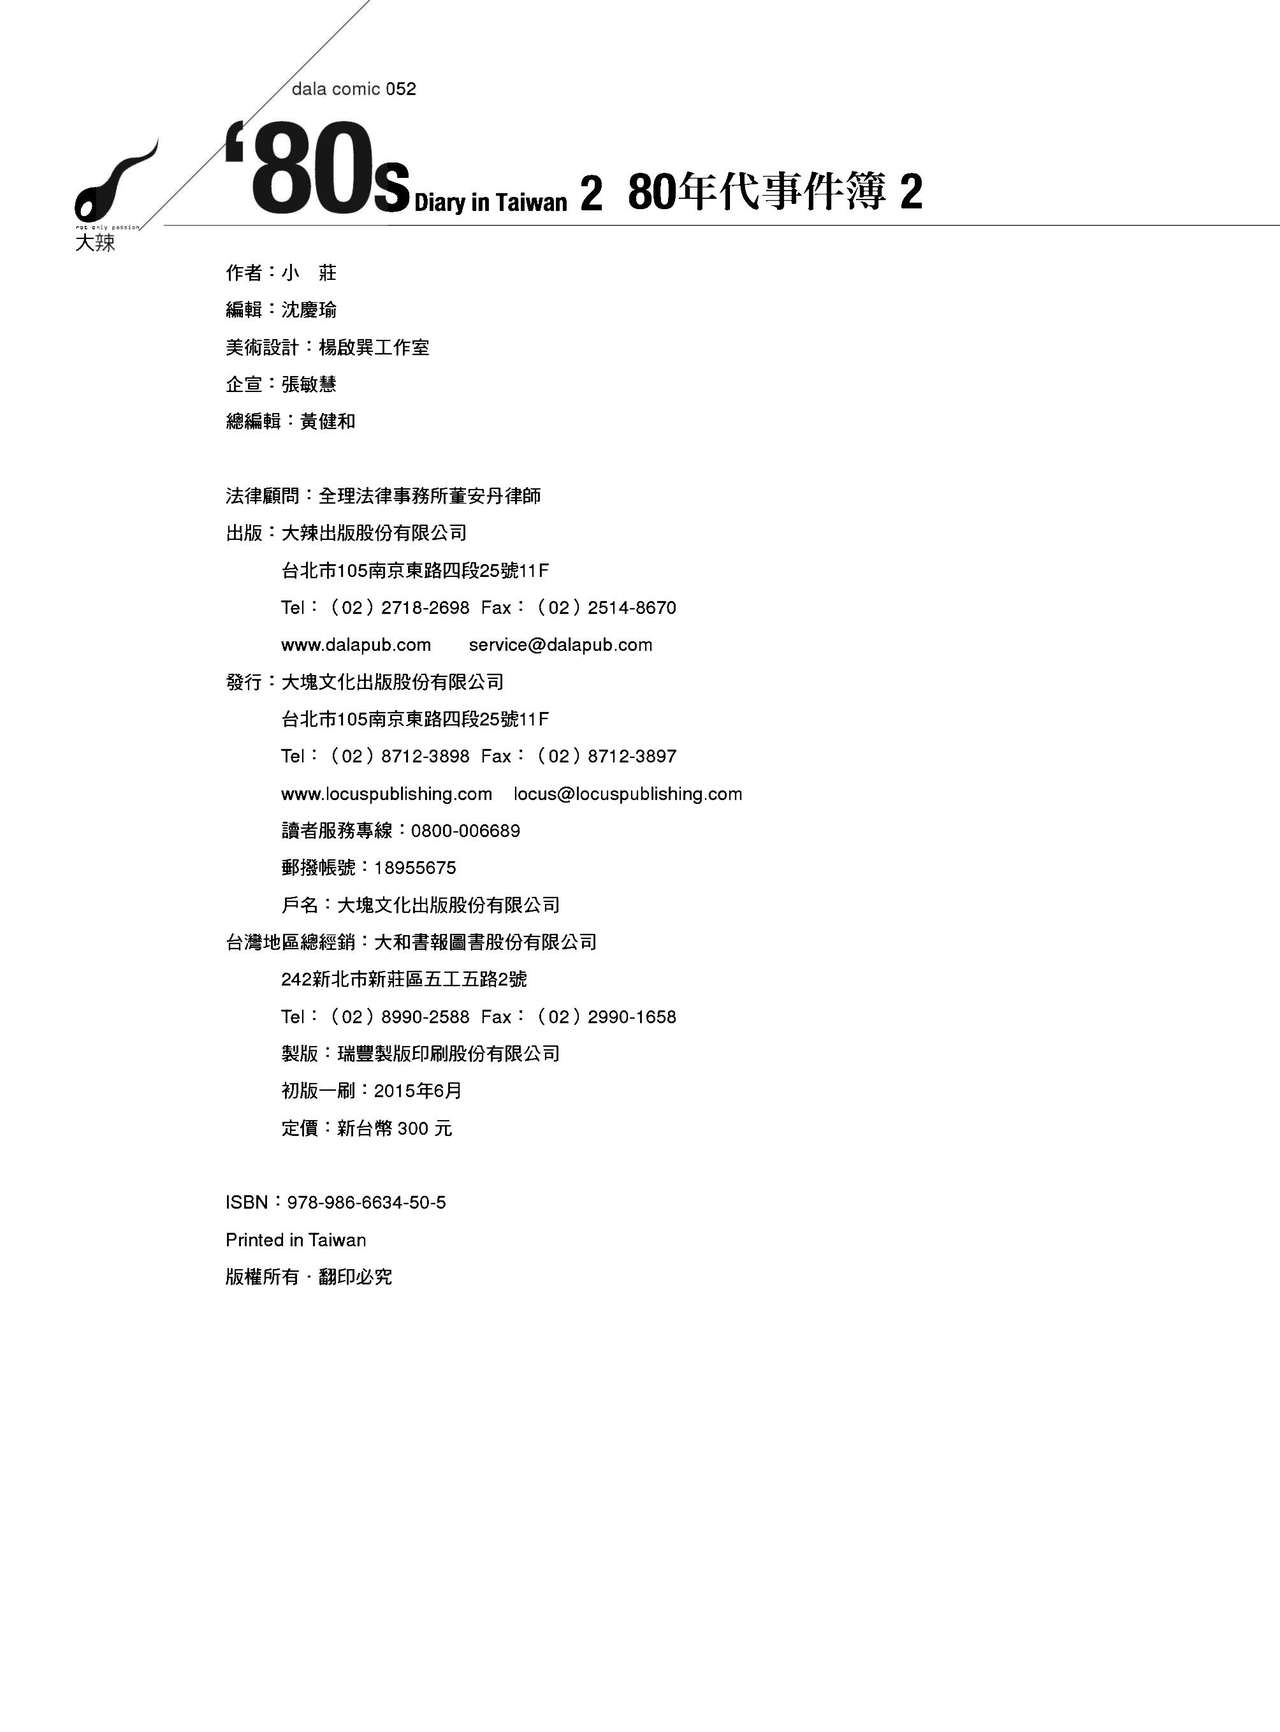 [Sean Chuang] 80’S Diary in Taiwan 2 2